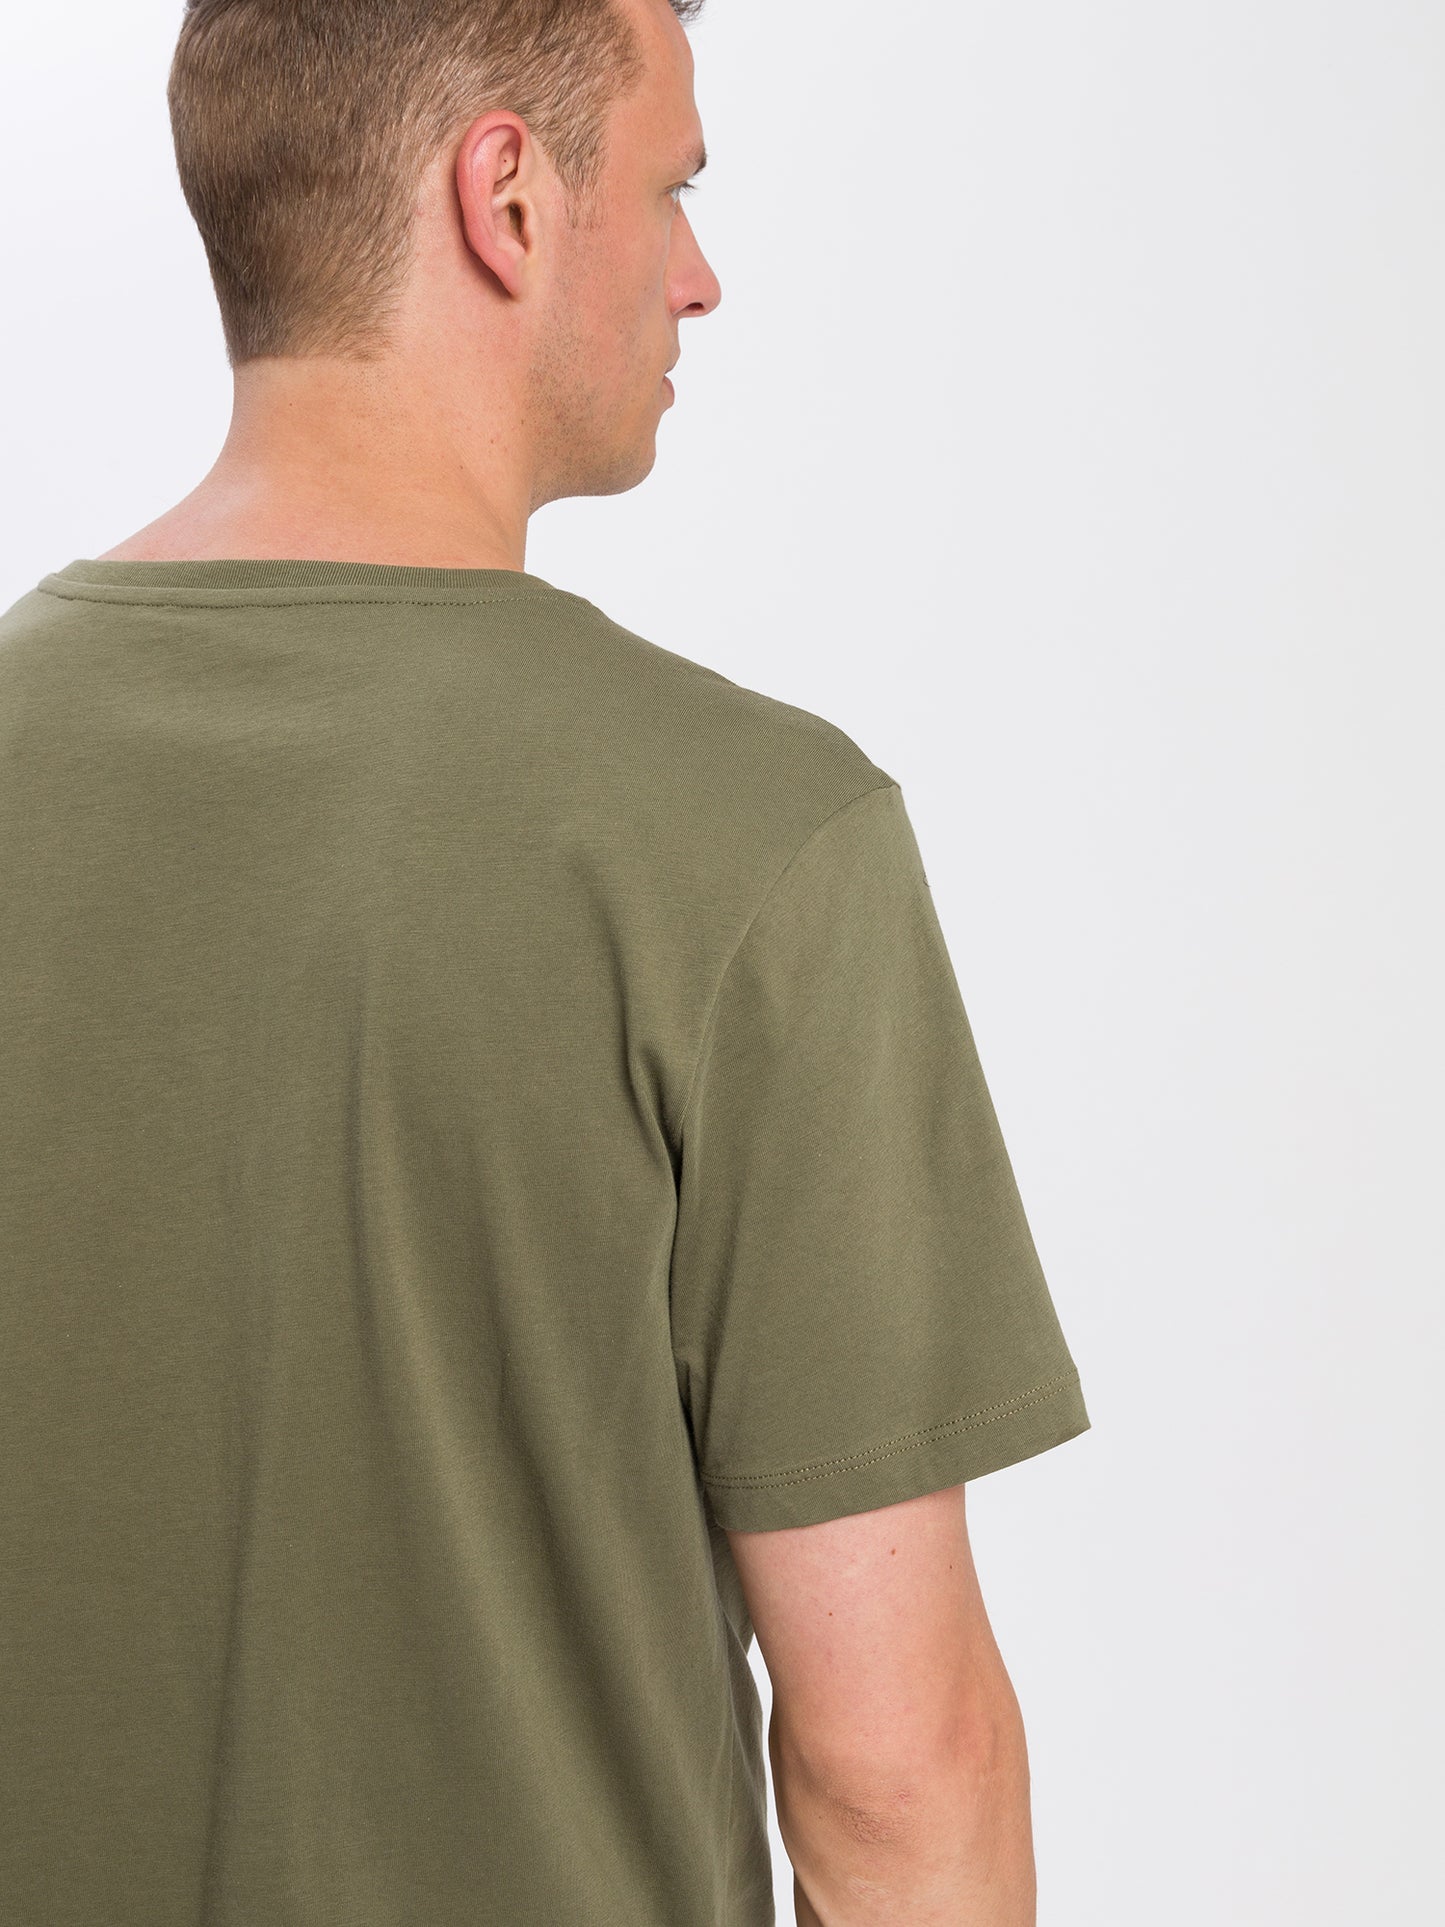 Men's Regular Print T-Shirt Nature green